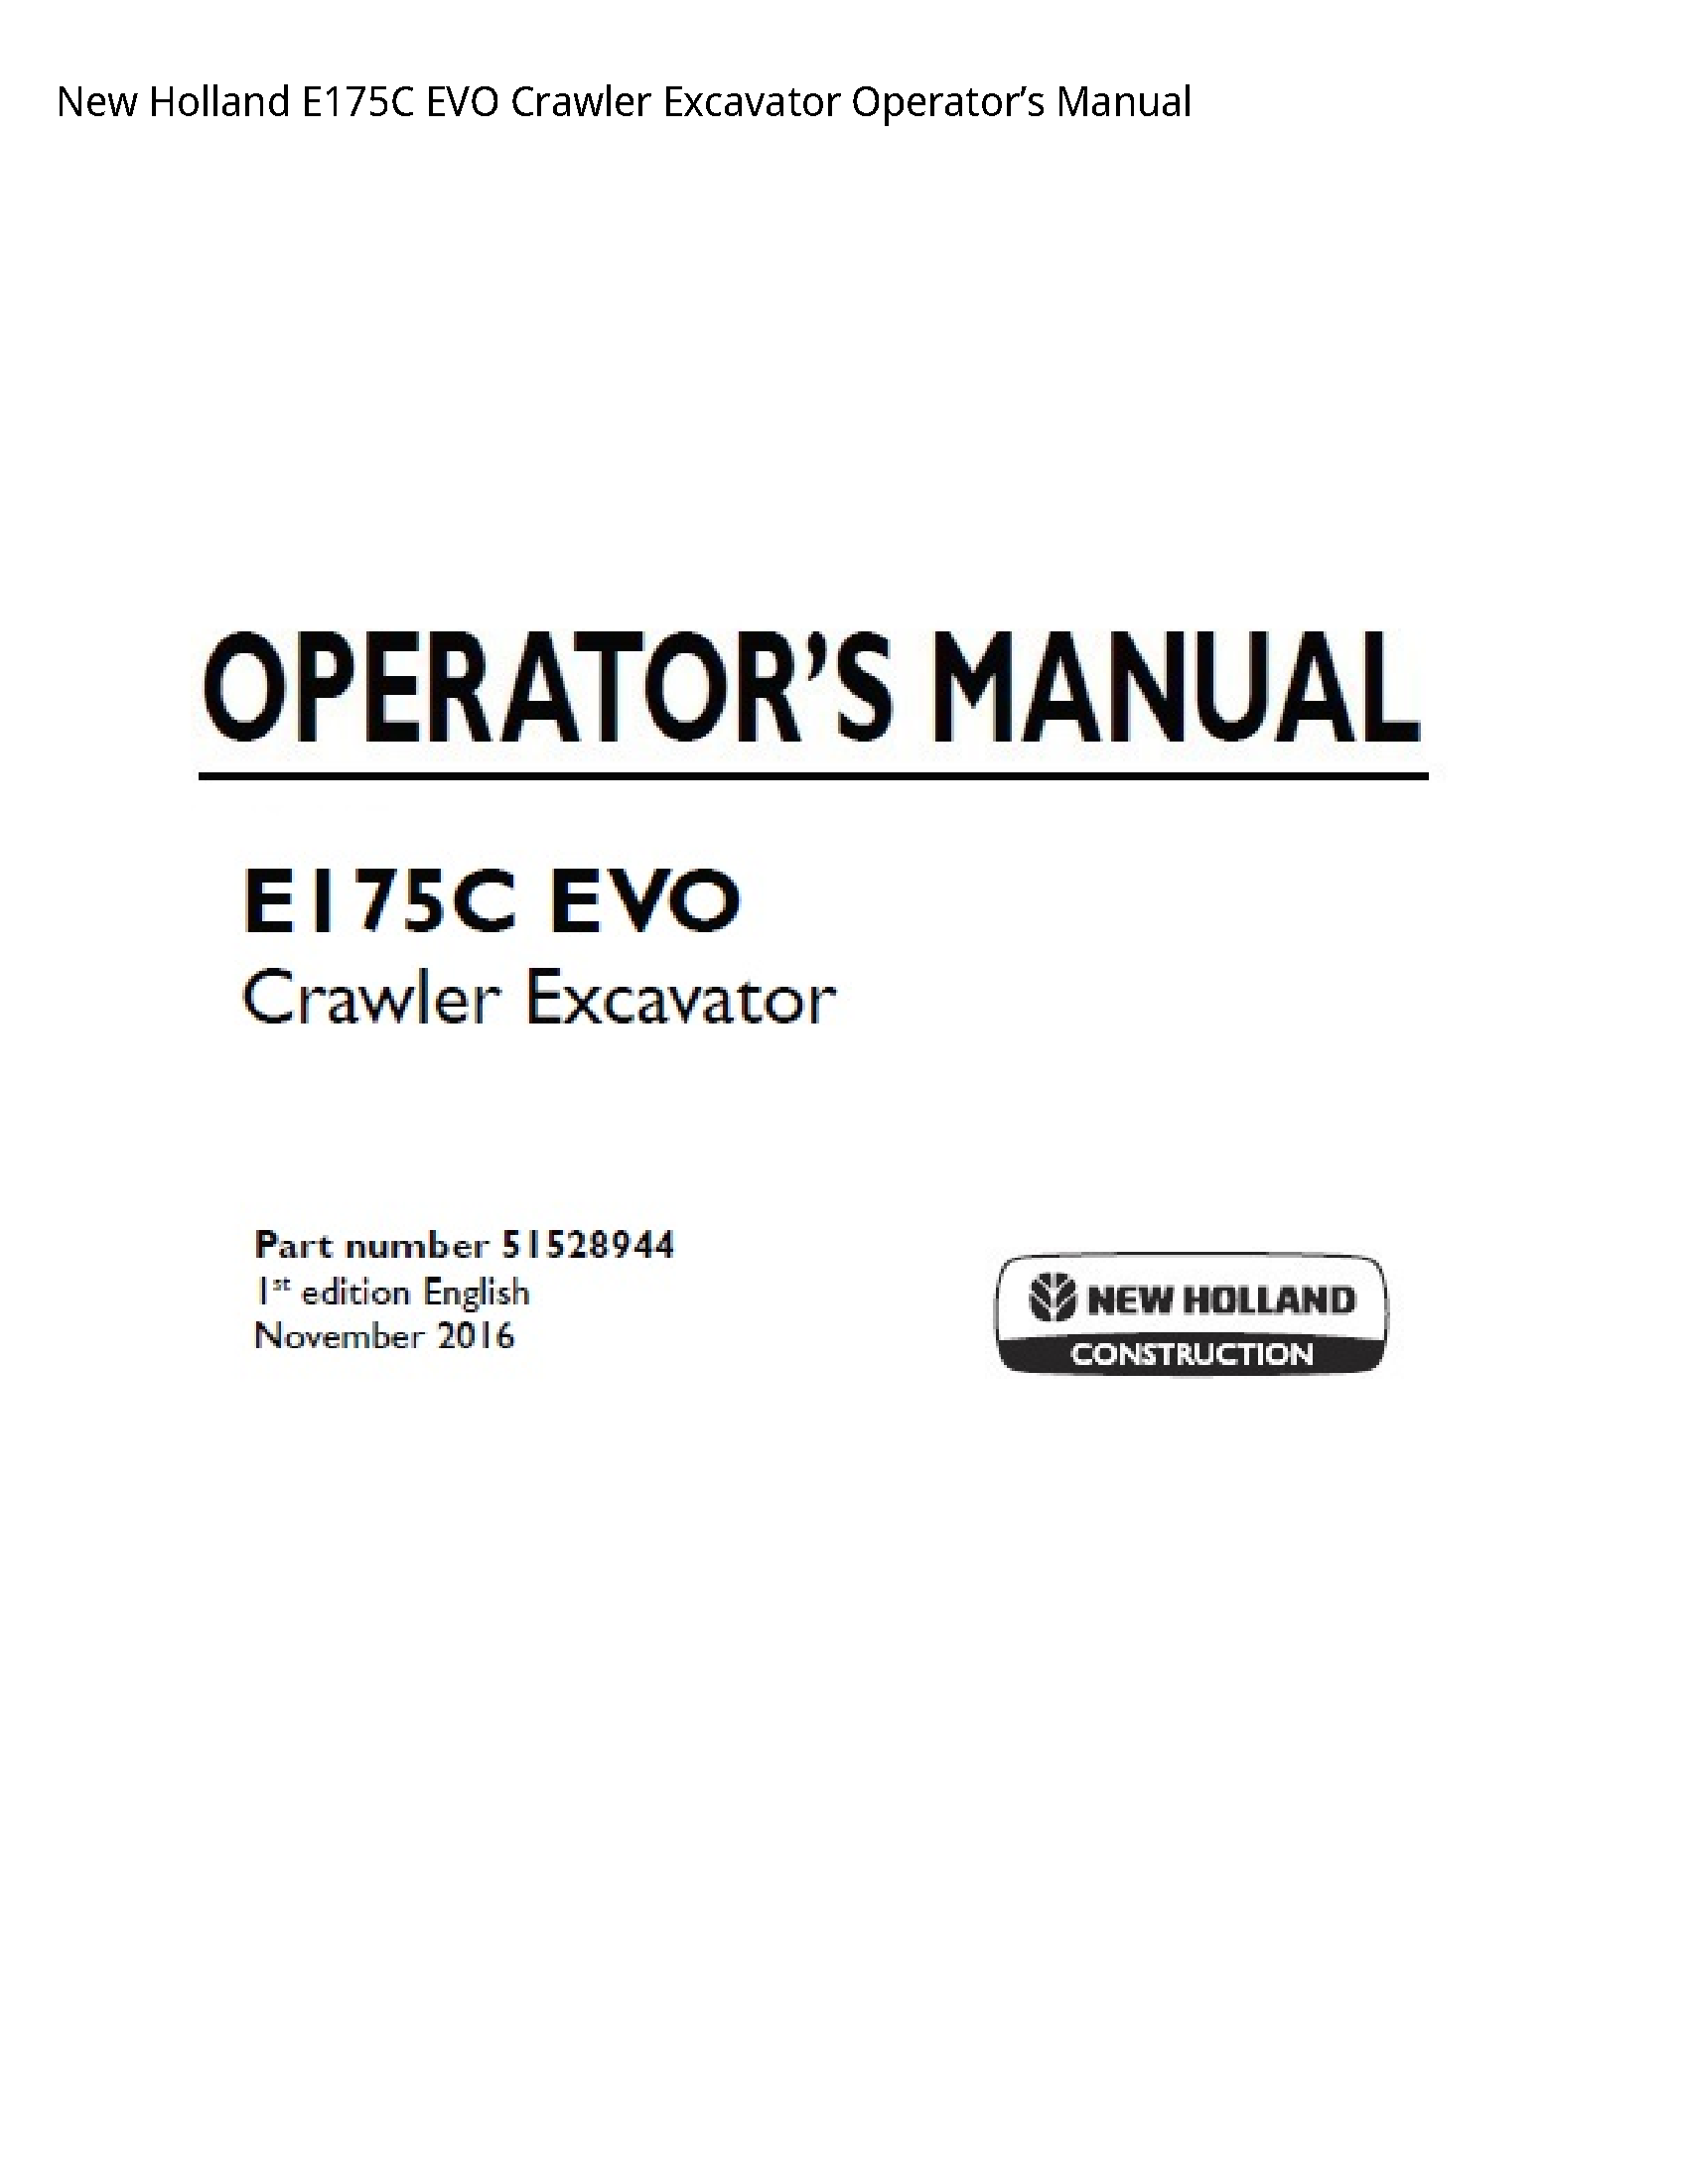 New Holland E175C EVO Crawler Excavator Operator’s manual